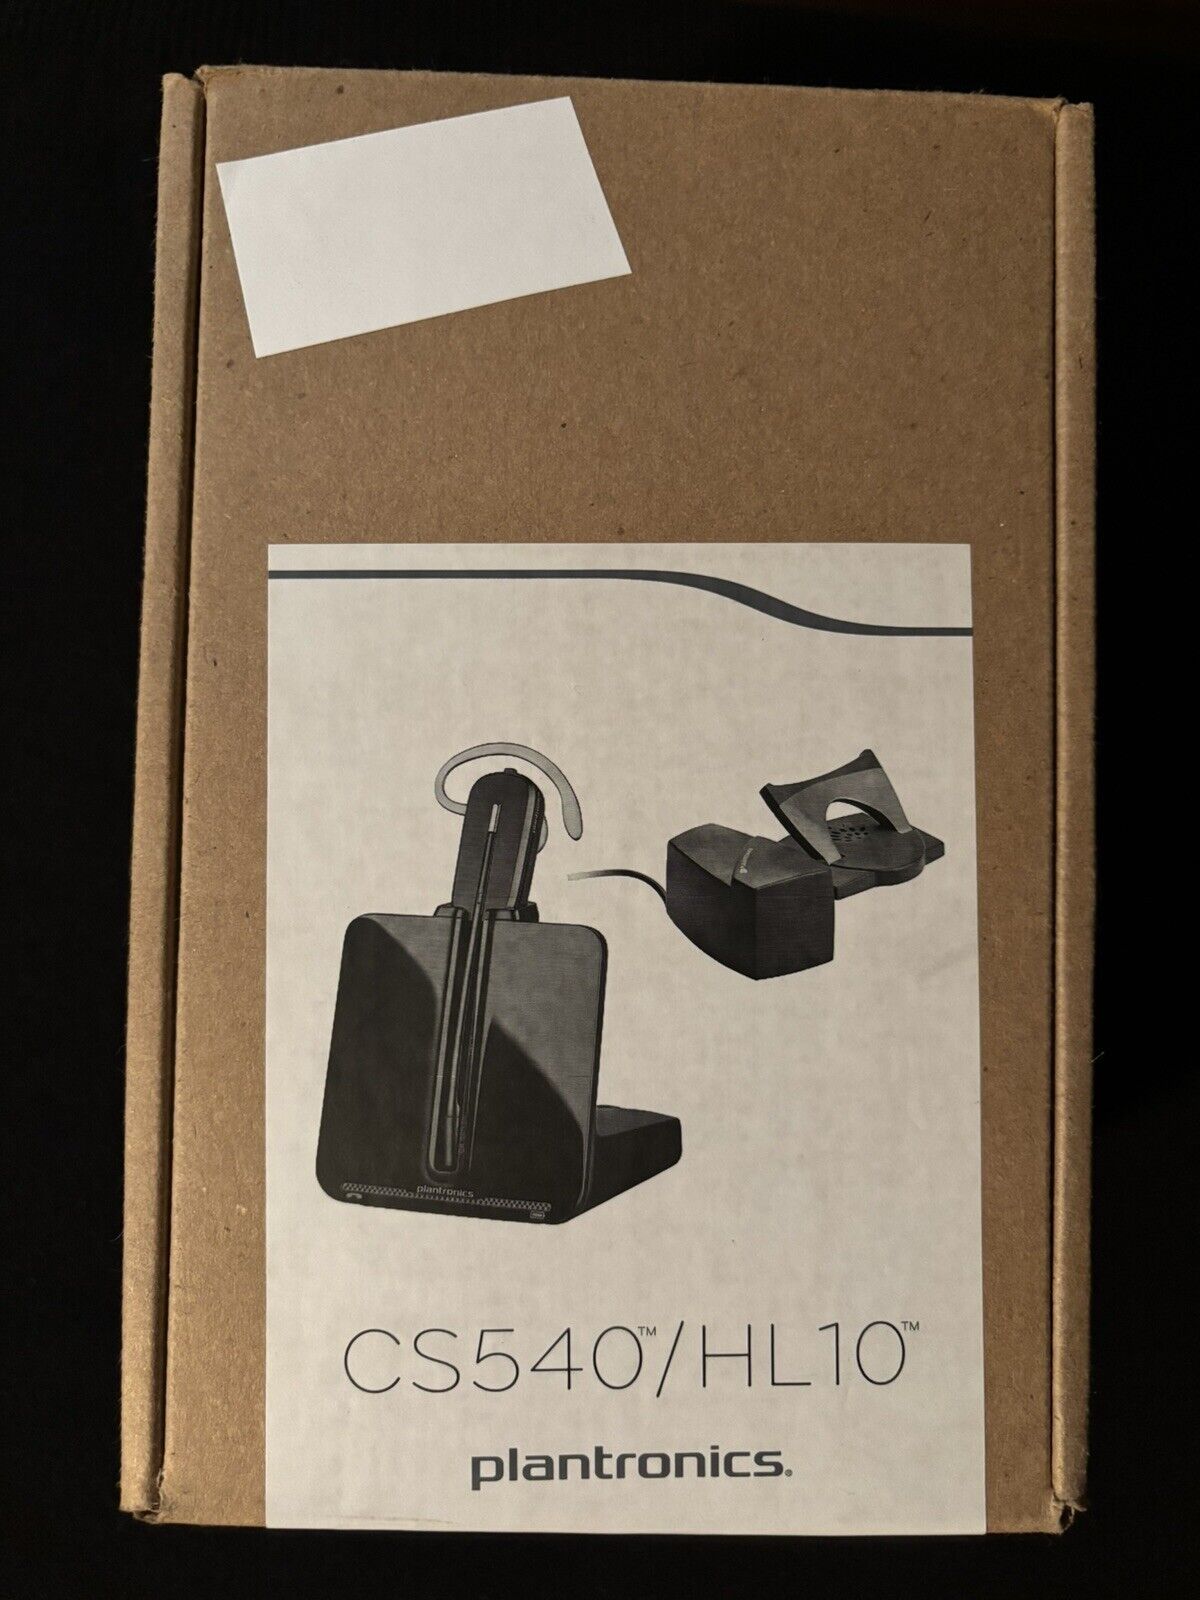 Plantronics CS540 / HL10 Wireless Telephone Headset System Plantronics CS540 / HL10